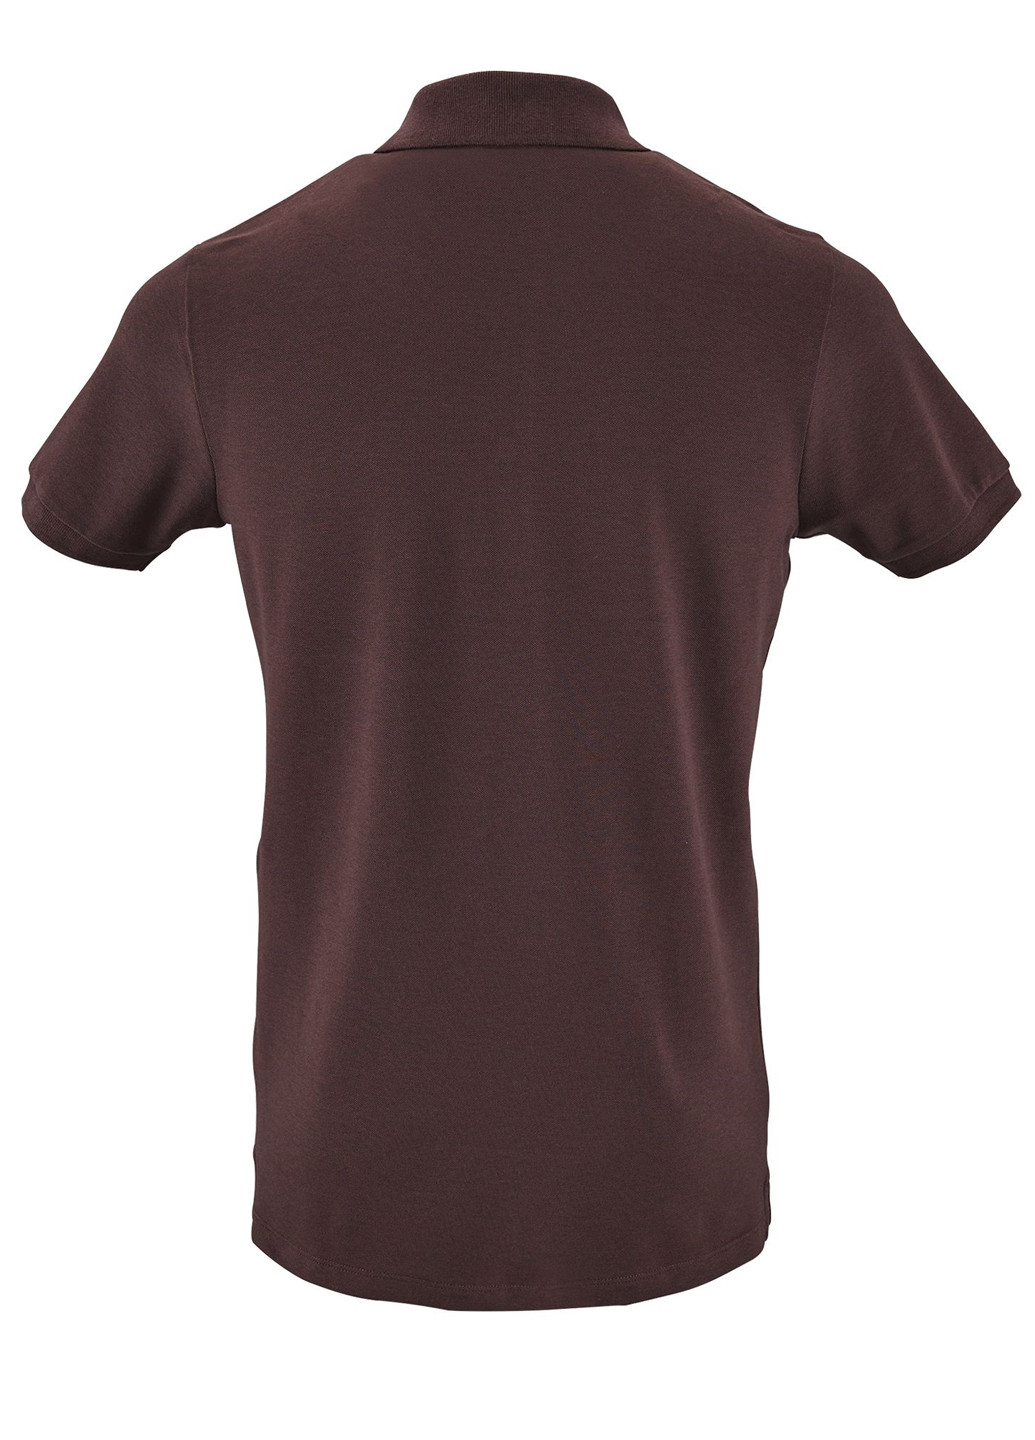 Бордовая футболка-поло для мужчин Sol's меланжевая